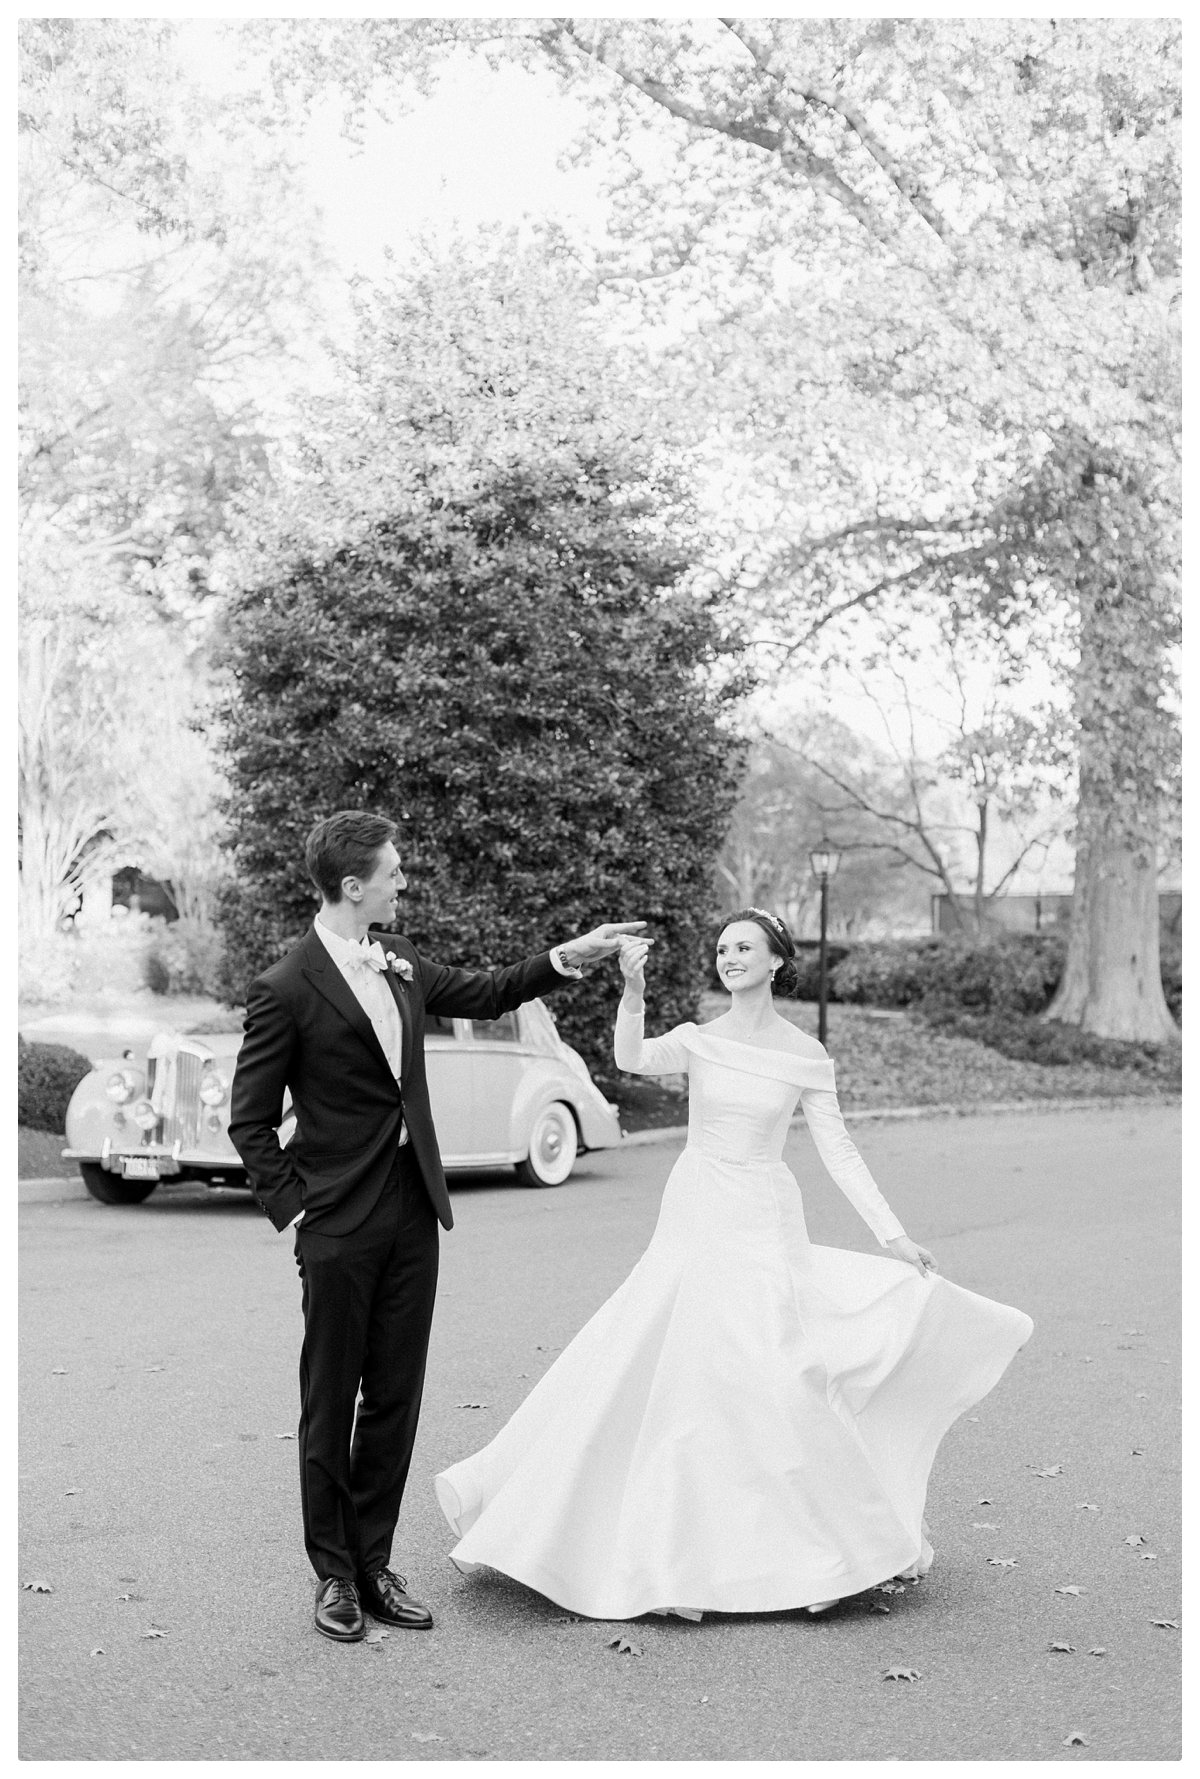 wedding-portraits-vintage-car-1953-bentley-richmond-0039.jpg